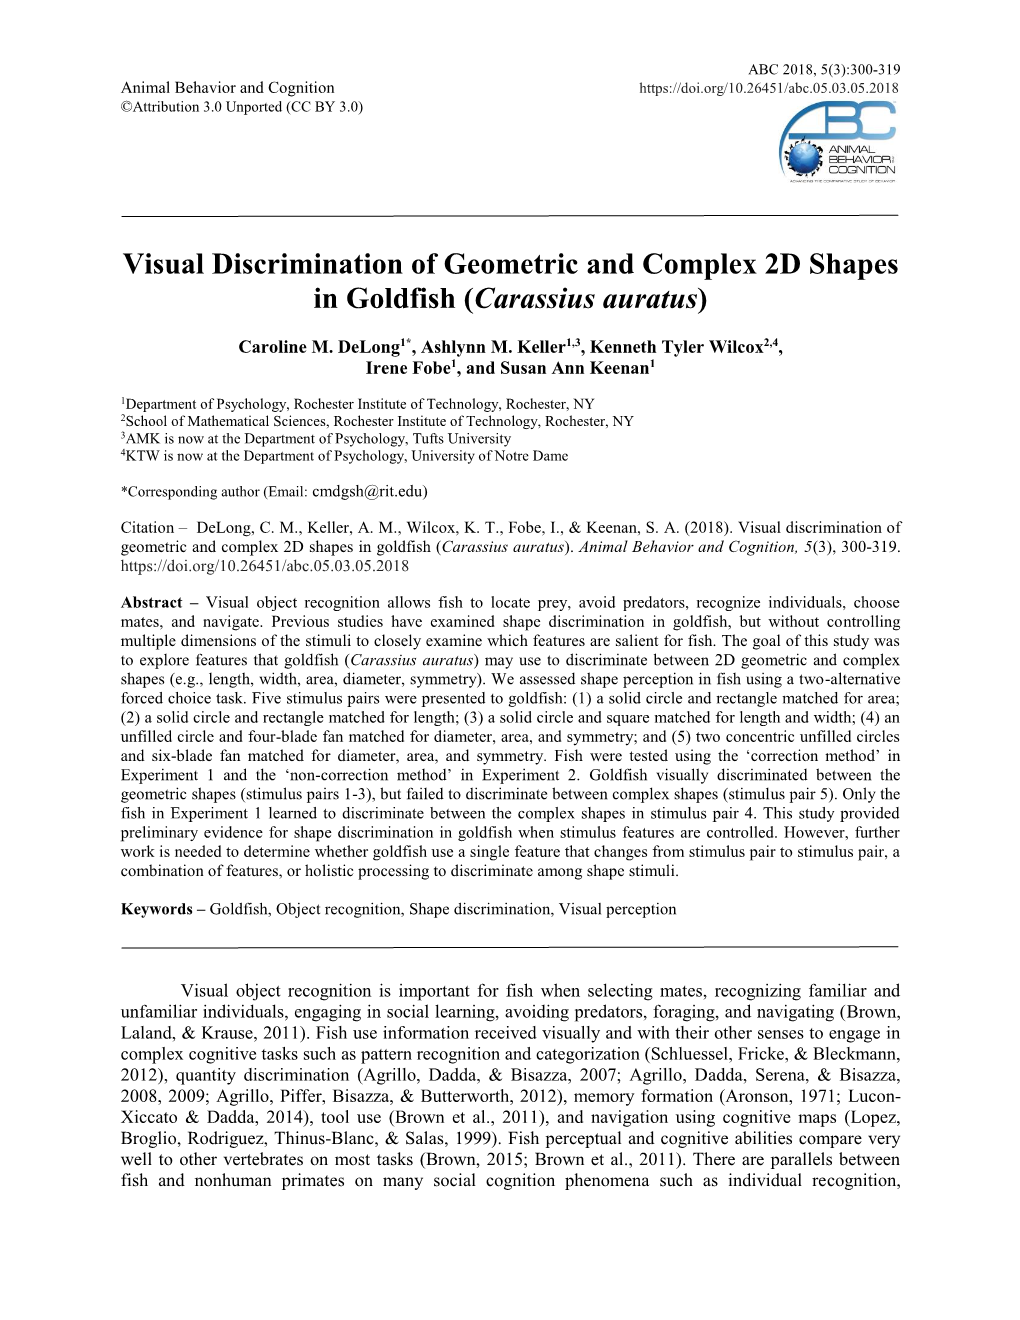 Visual Discrimination of Geometric and Complex 2D Shapes in Goldfish (Carassius Auratus)